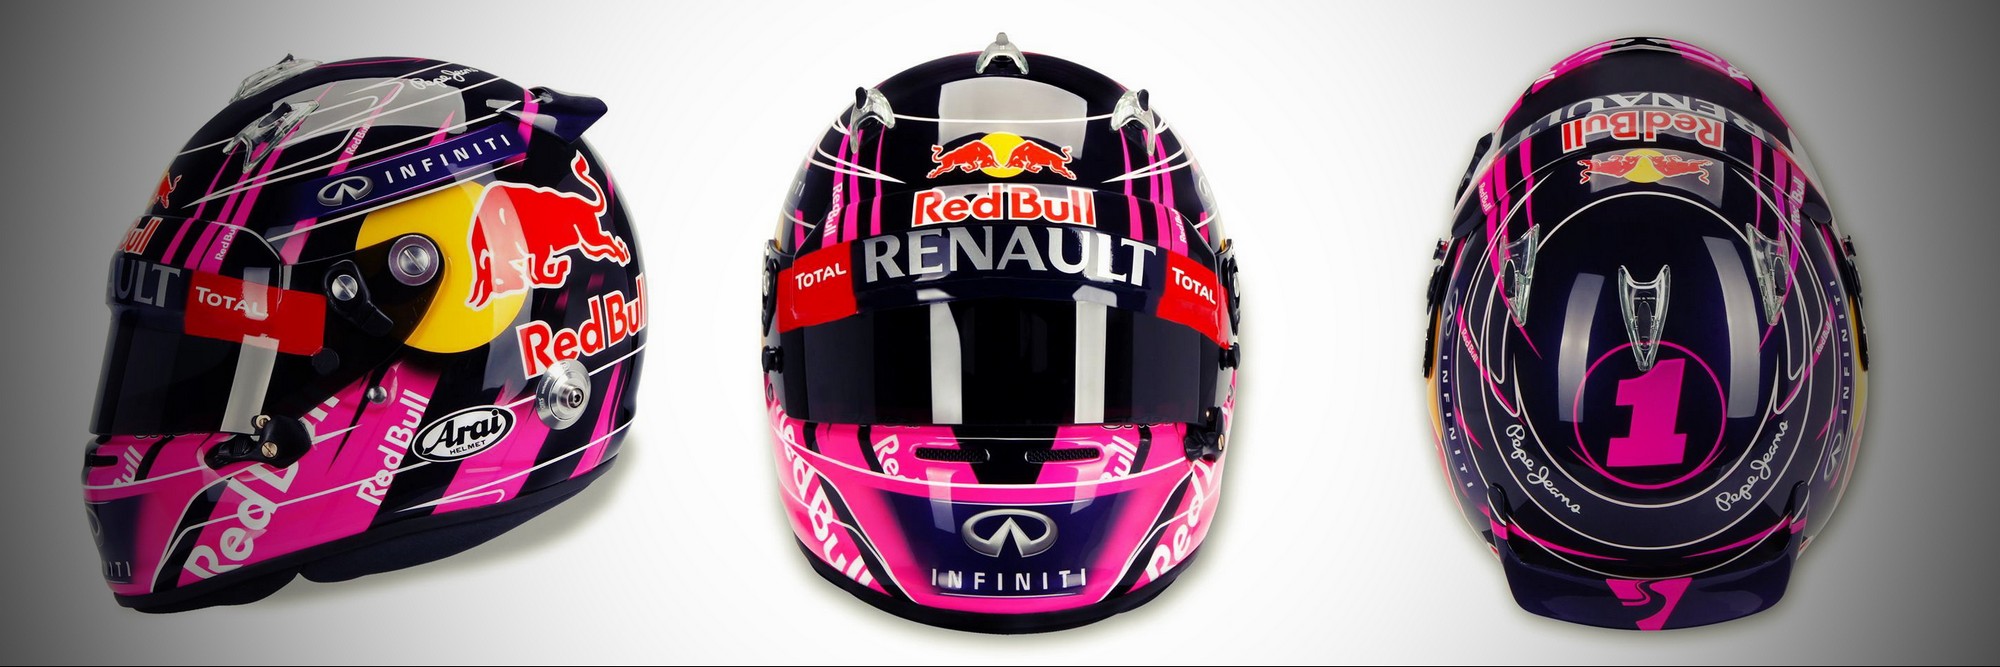 Шлем Себастьяна Феттеля на Гран-При Бразилии 2014 | 2014 Brazilian Grand Prix helmet of Sebastian Vettel